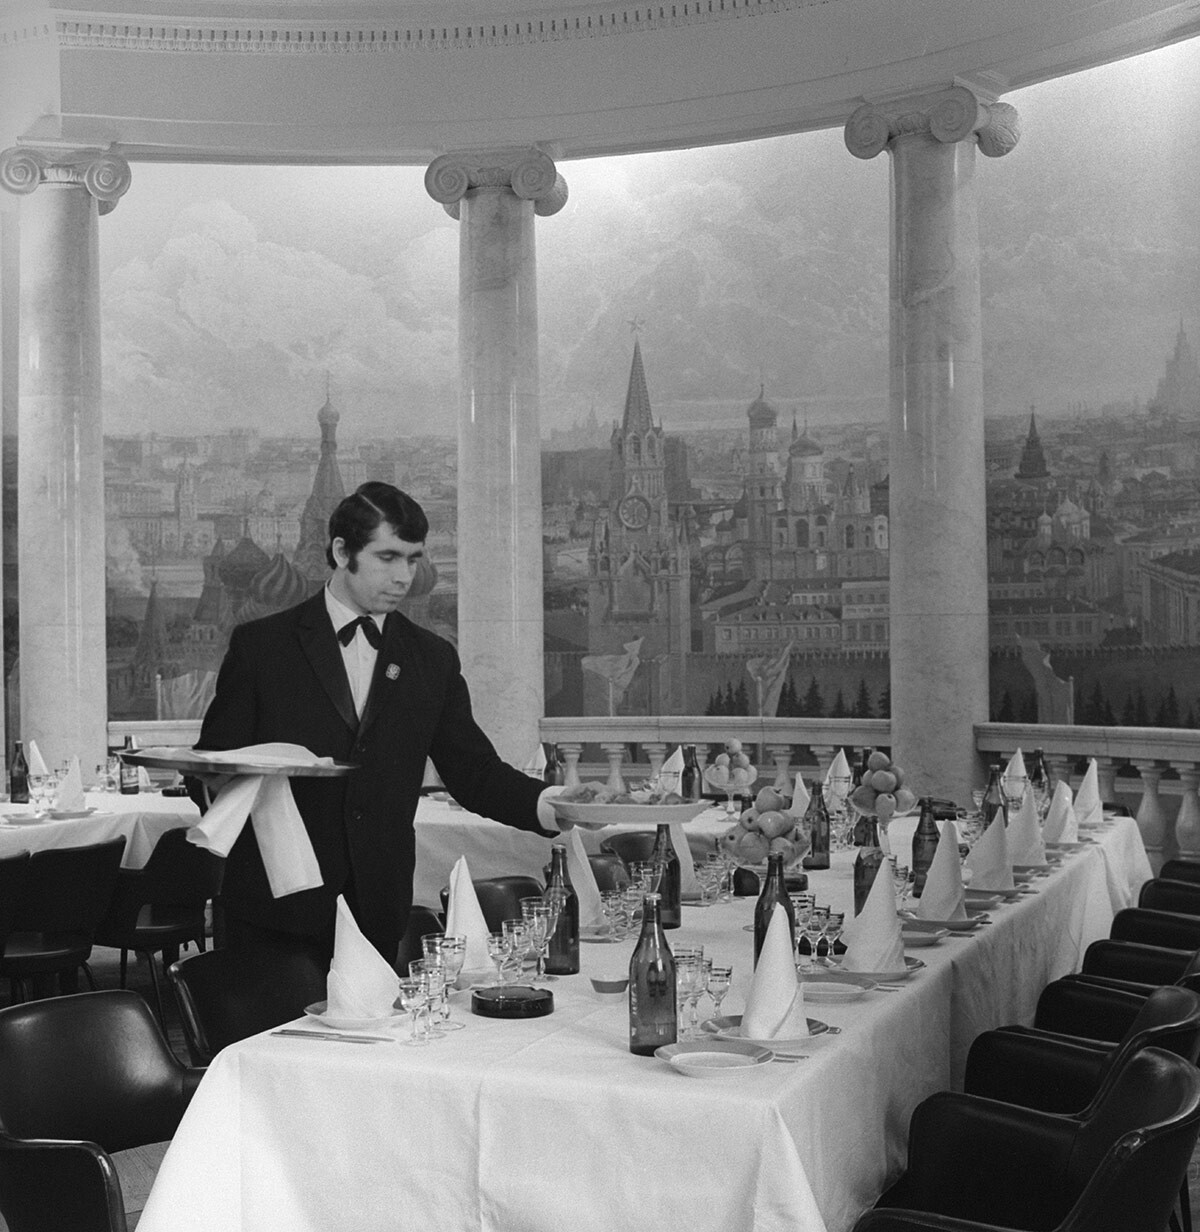 In ‘Praga’ restaurant, 1968